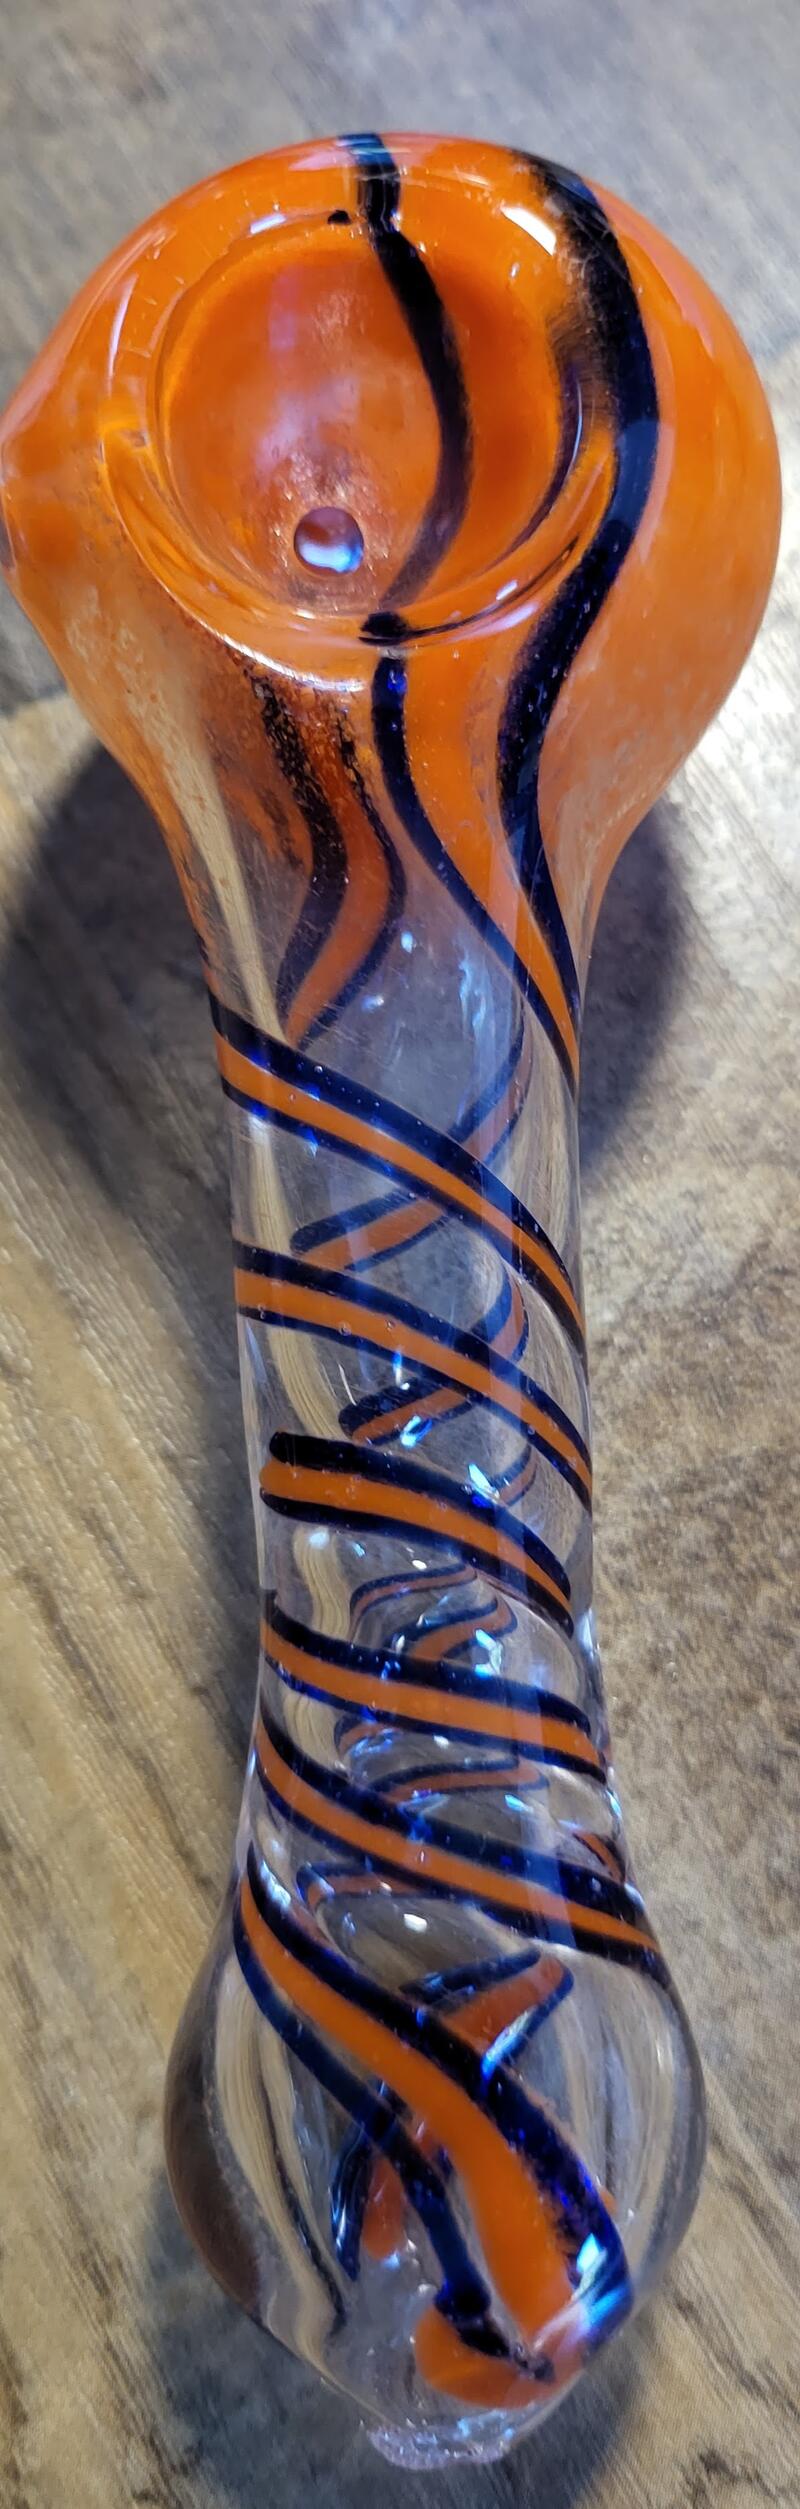 Glass Pipe - 4.5" Length & 3.5" Length